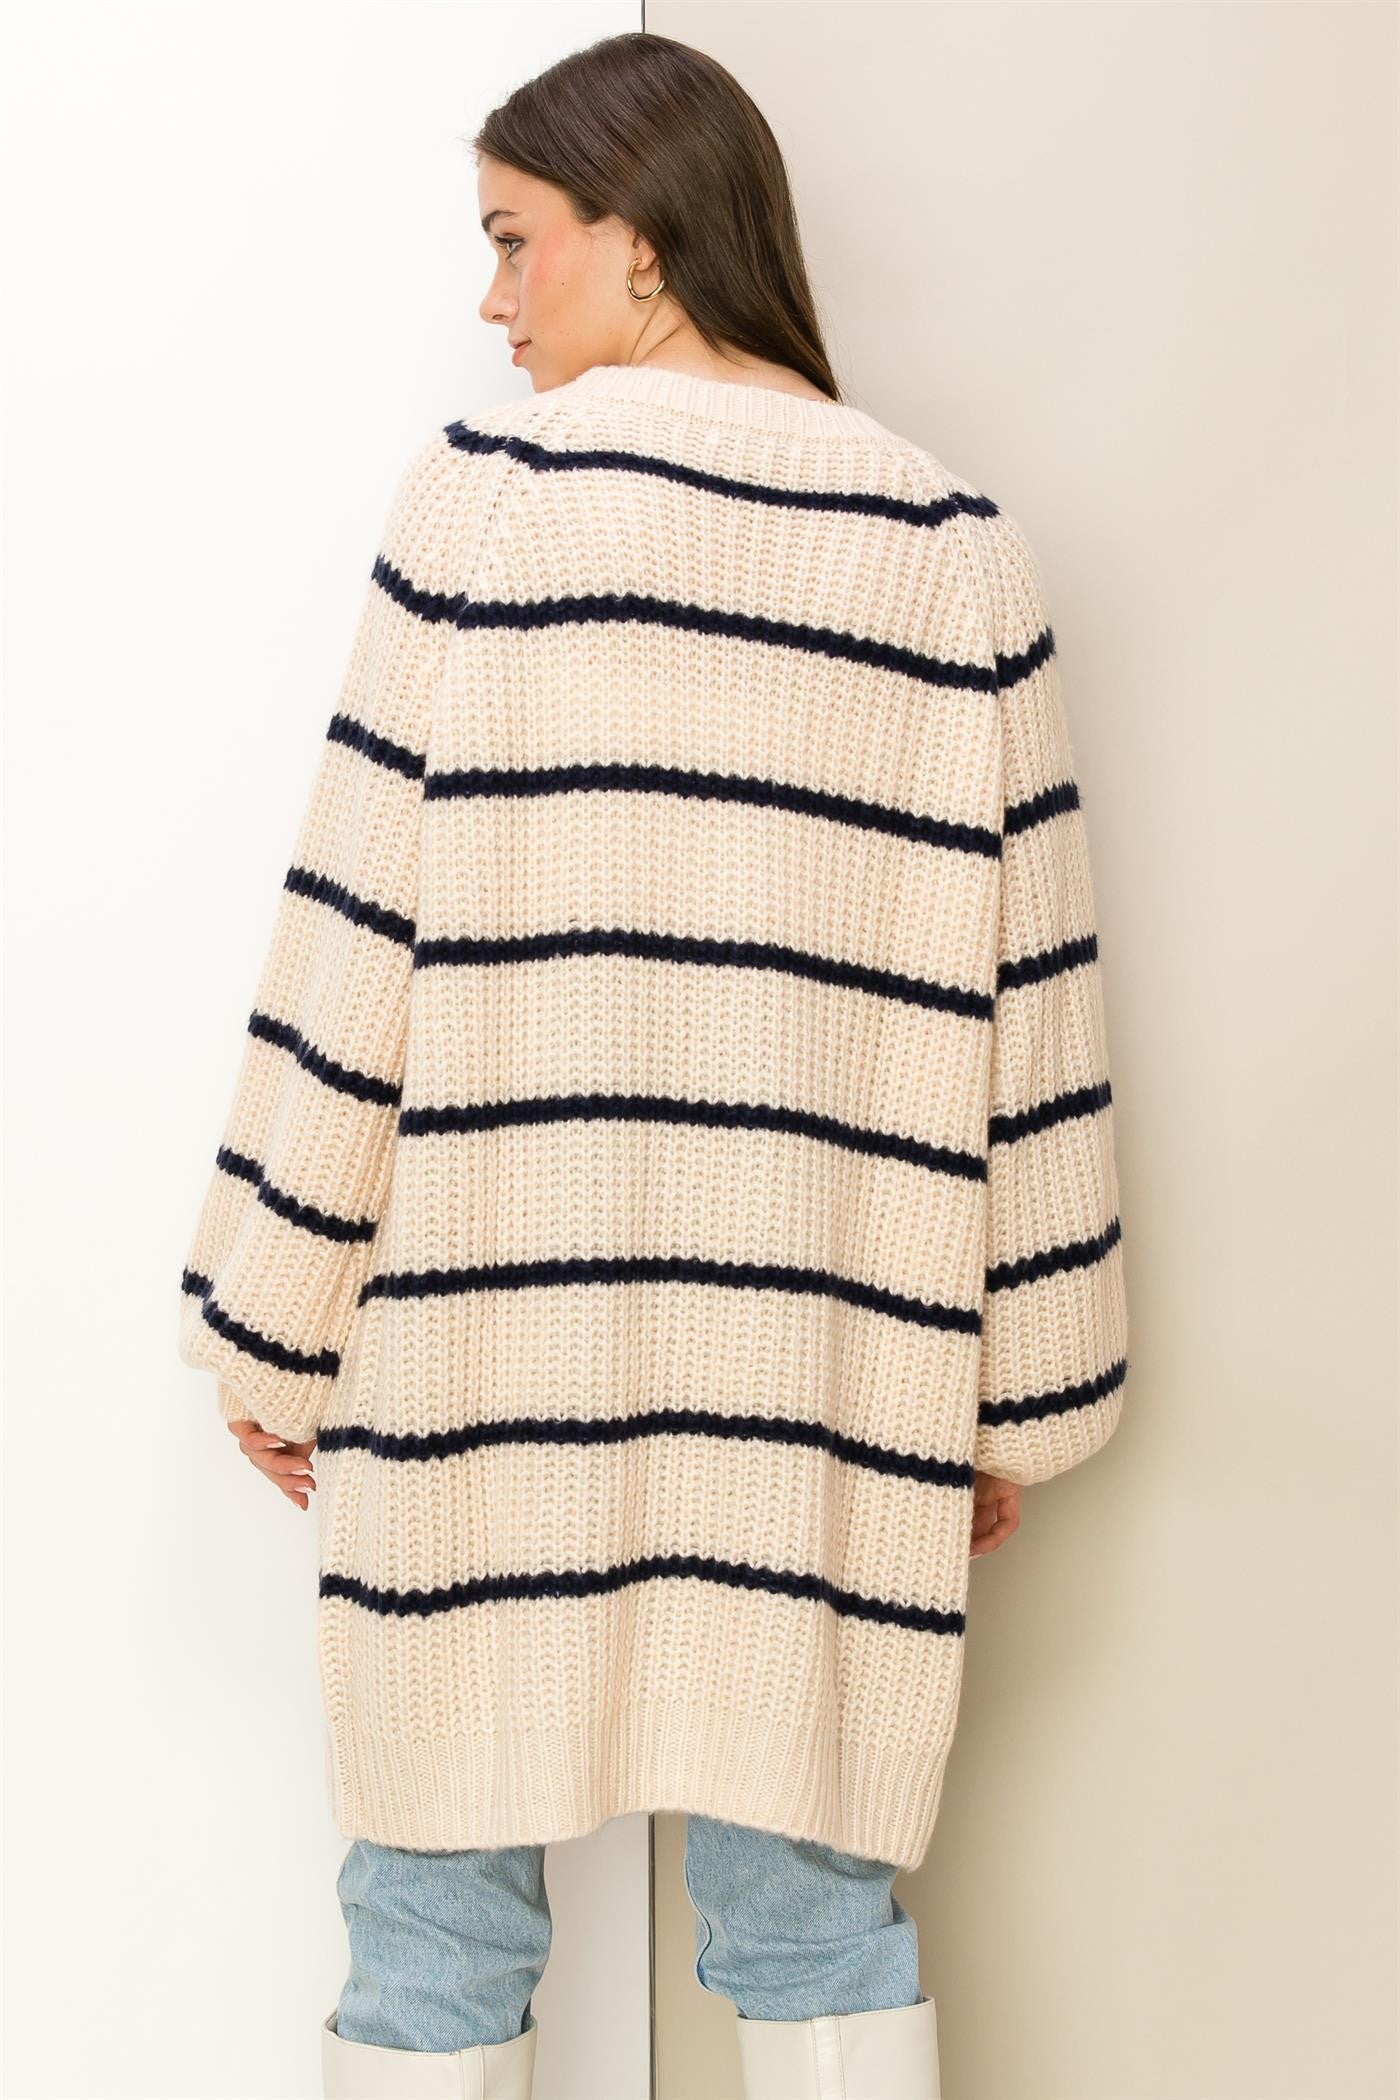 Aubree Striped Sweater Cardigan